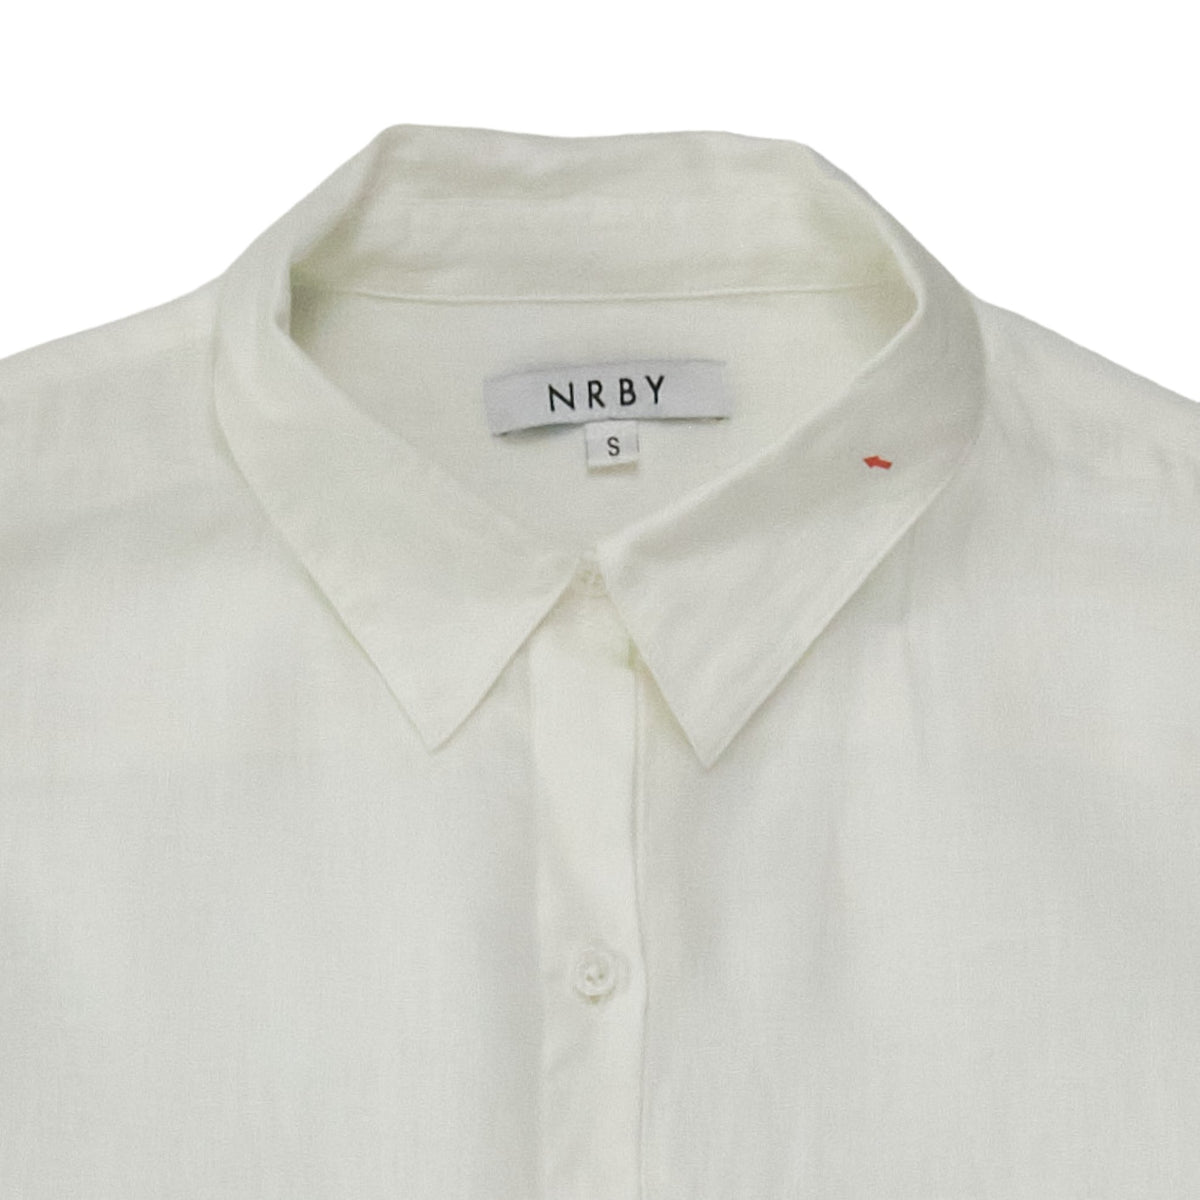 NRBY White Linen Shirt Dress